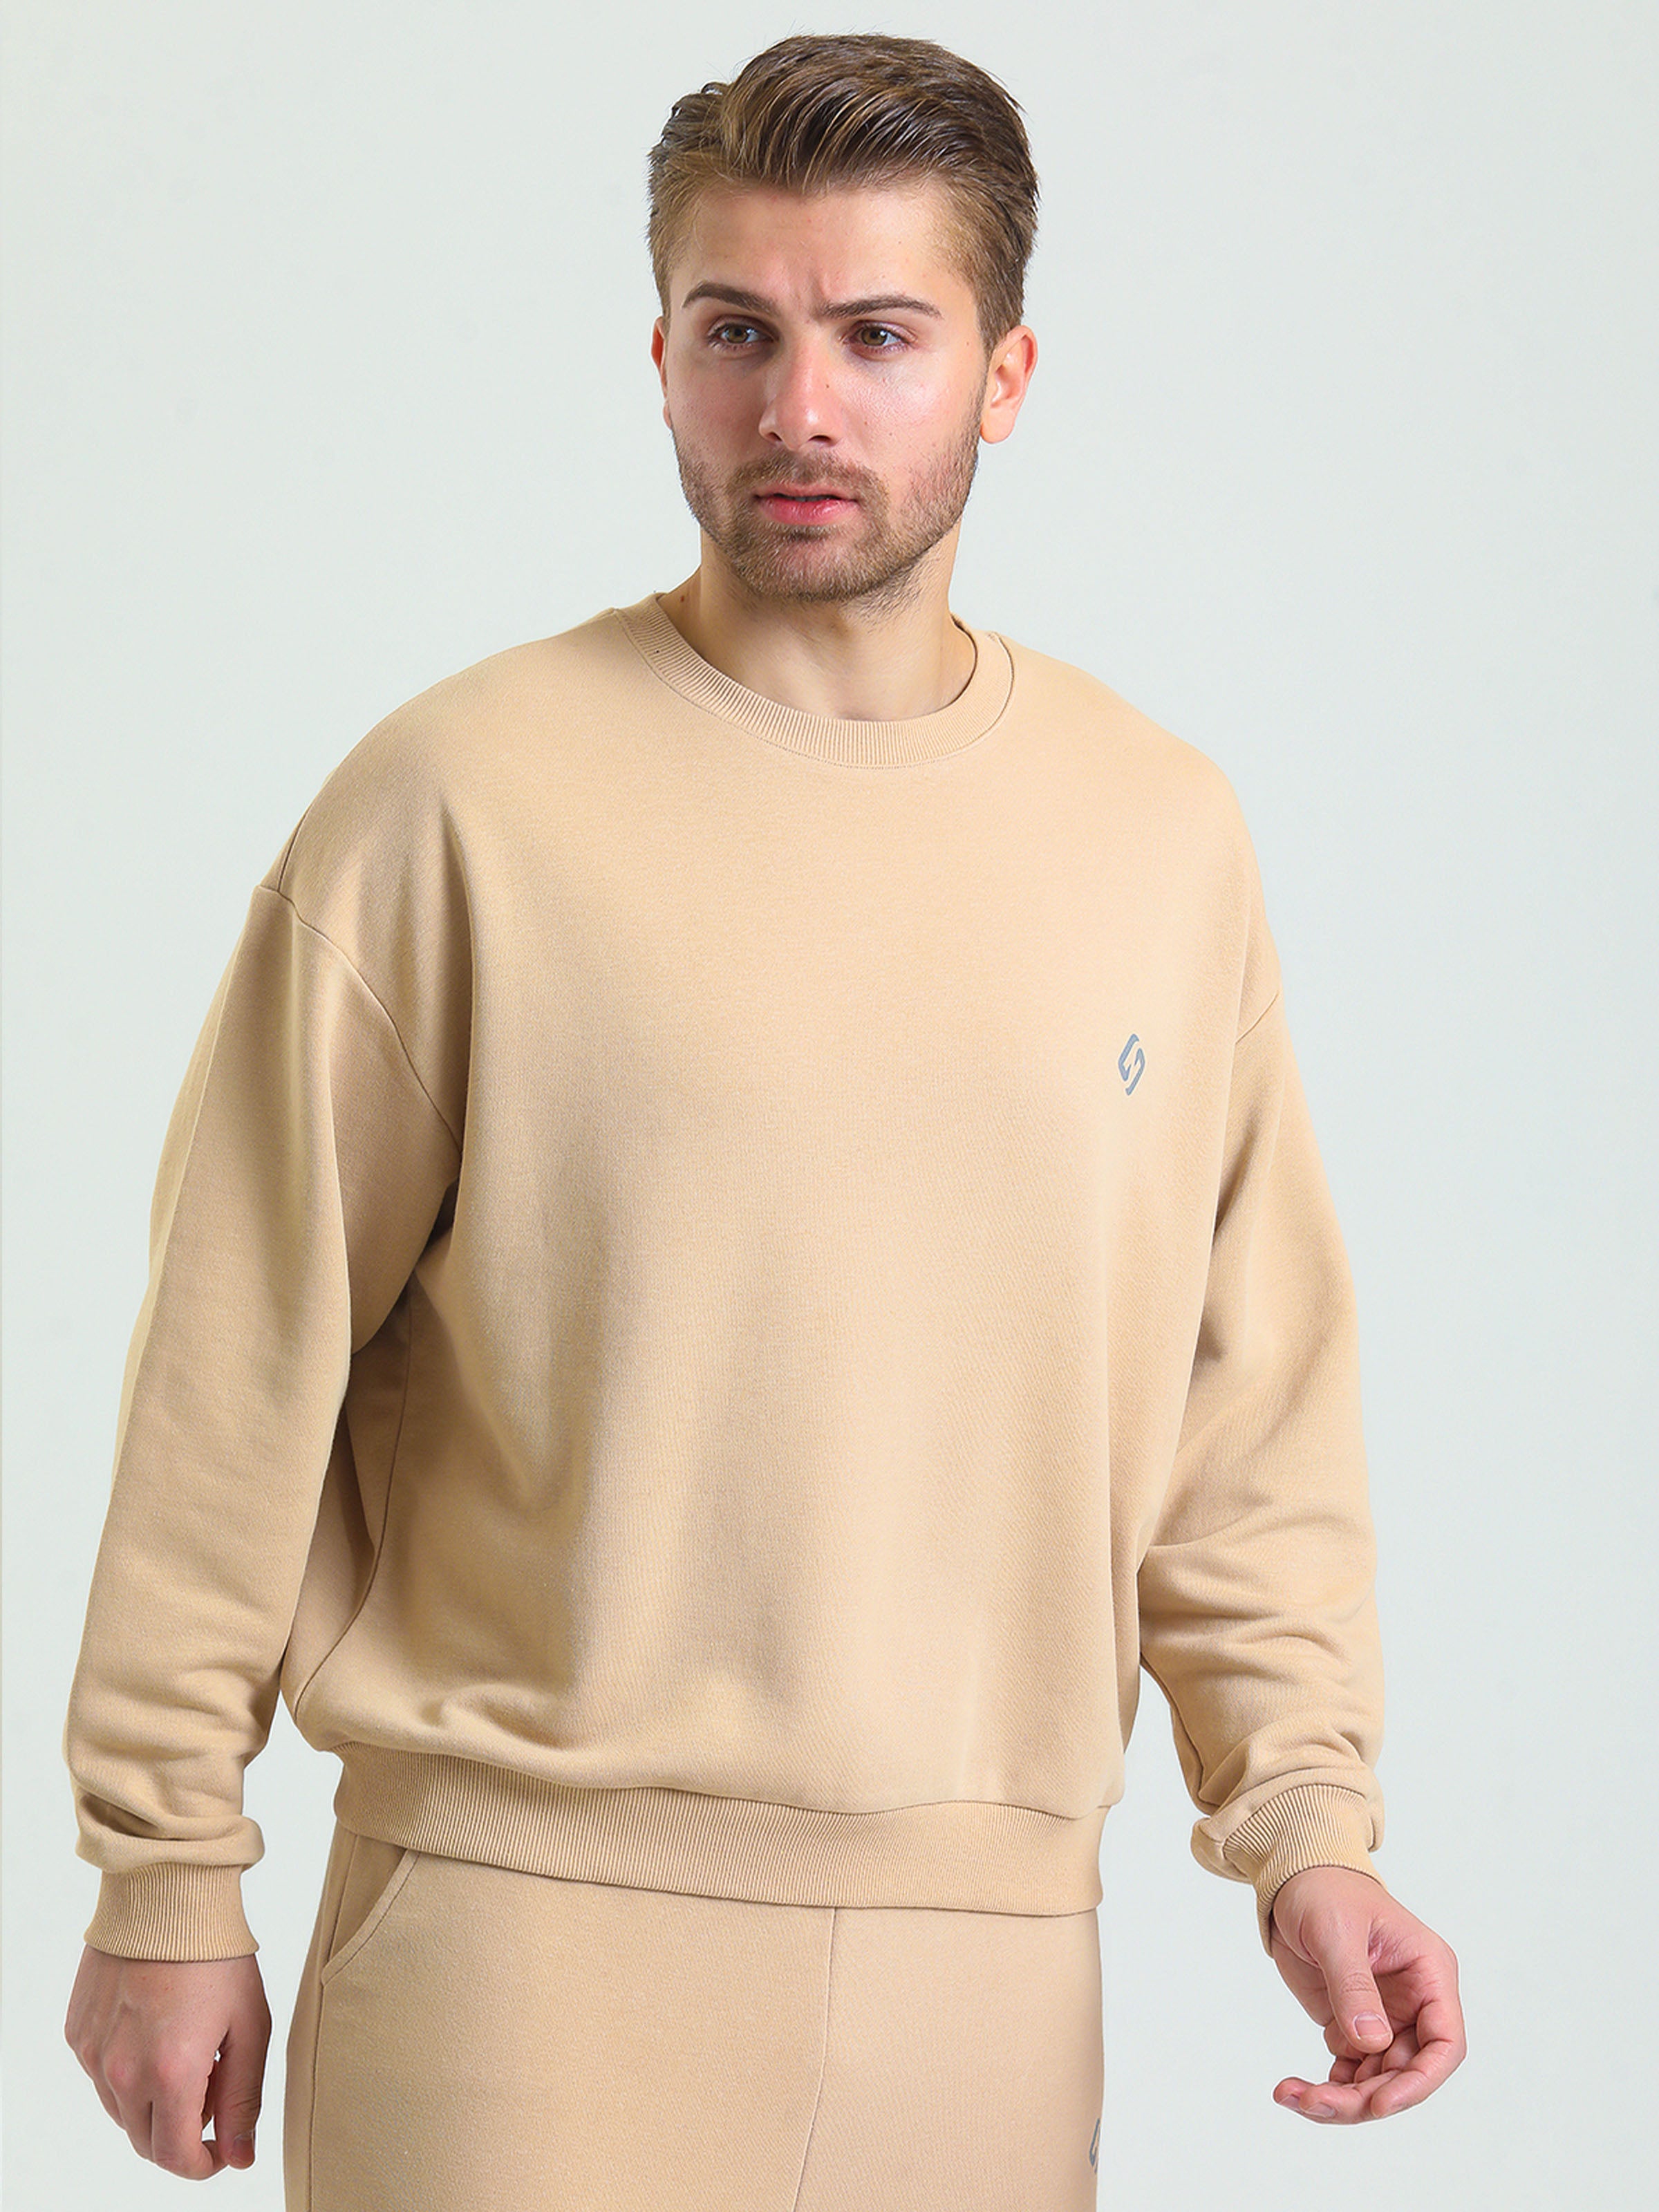 A Man Wearing Light Beige Color Oversized Gender-Neutral_Crew-Neck Cotton Sweatshirt